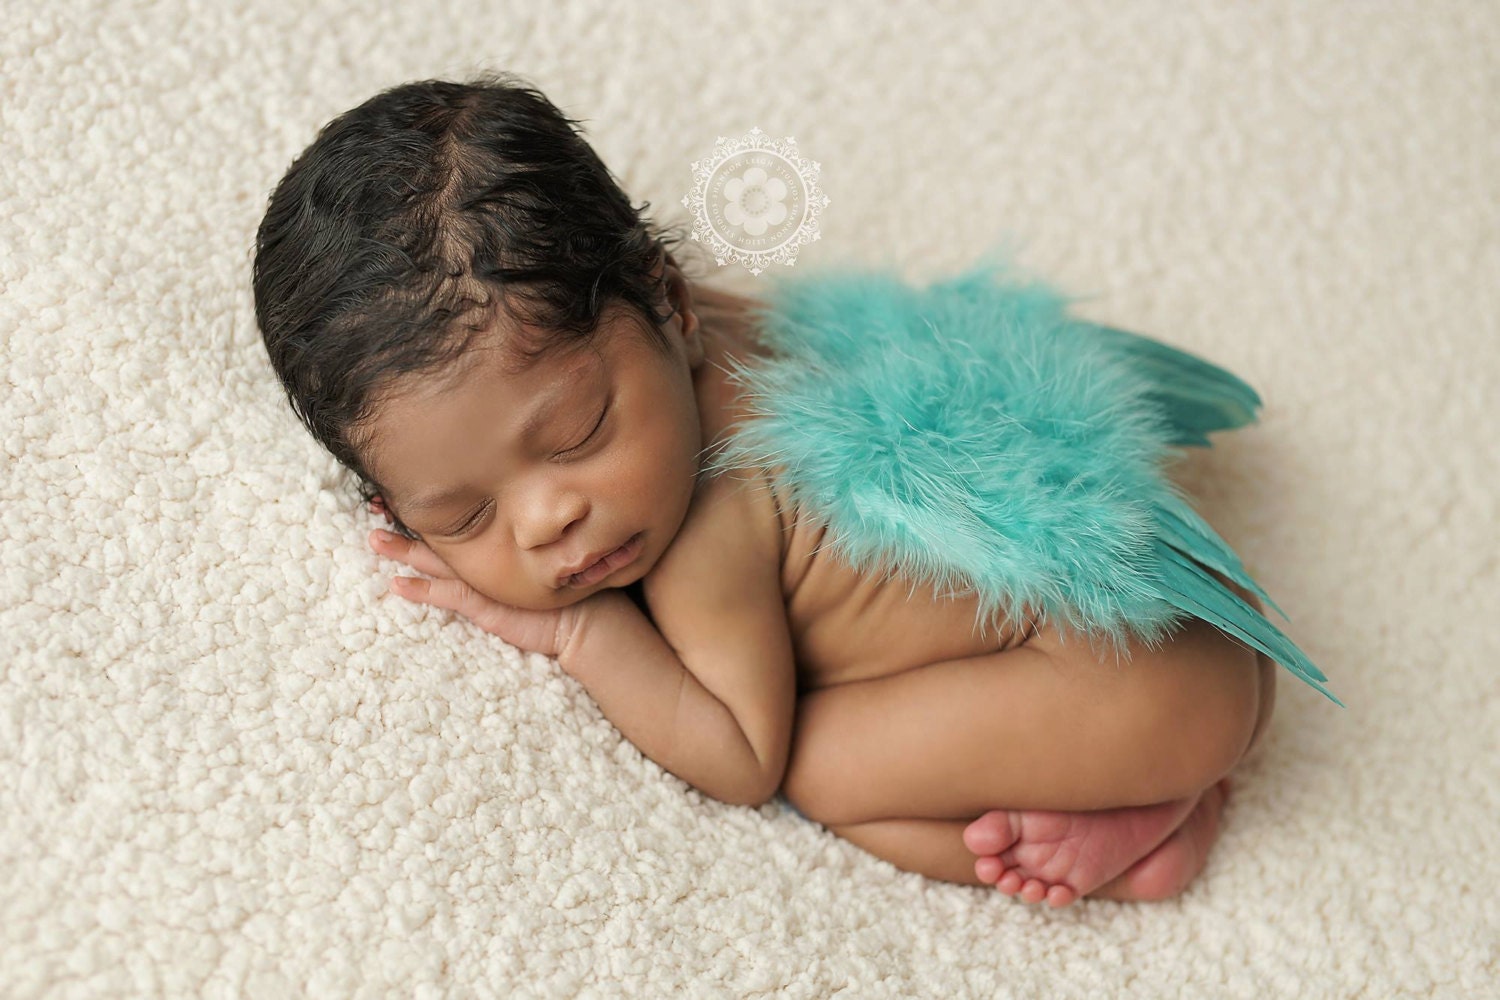 Aqua Baby Wings / Baby Angel Wing Set / Aqua Angel Wings / Newborn Photo Prop / Newborn Wing / Newborn Angel Costume / Baby Boy Angel Wings